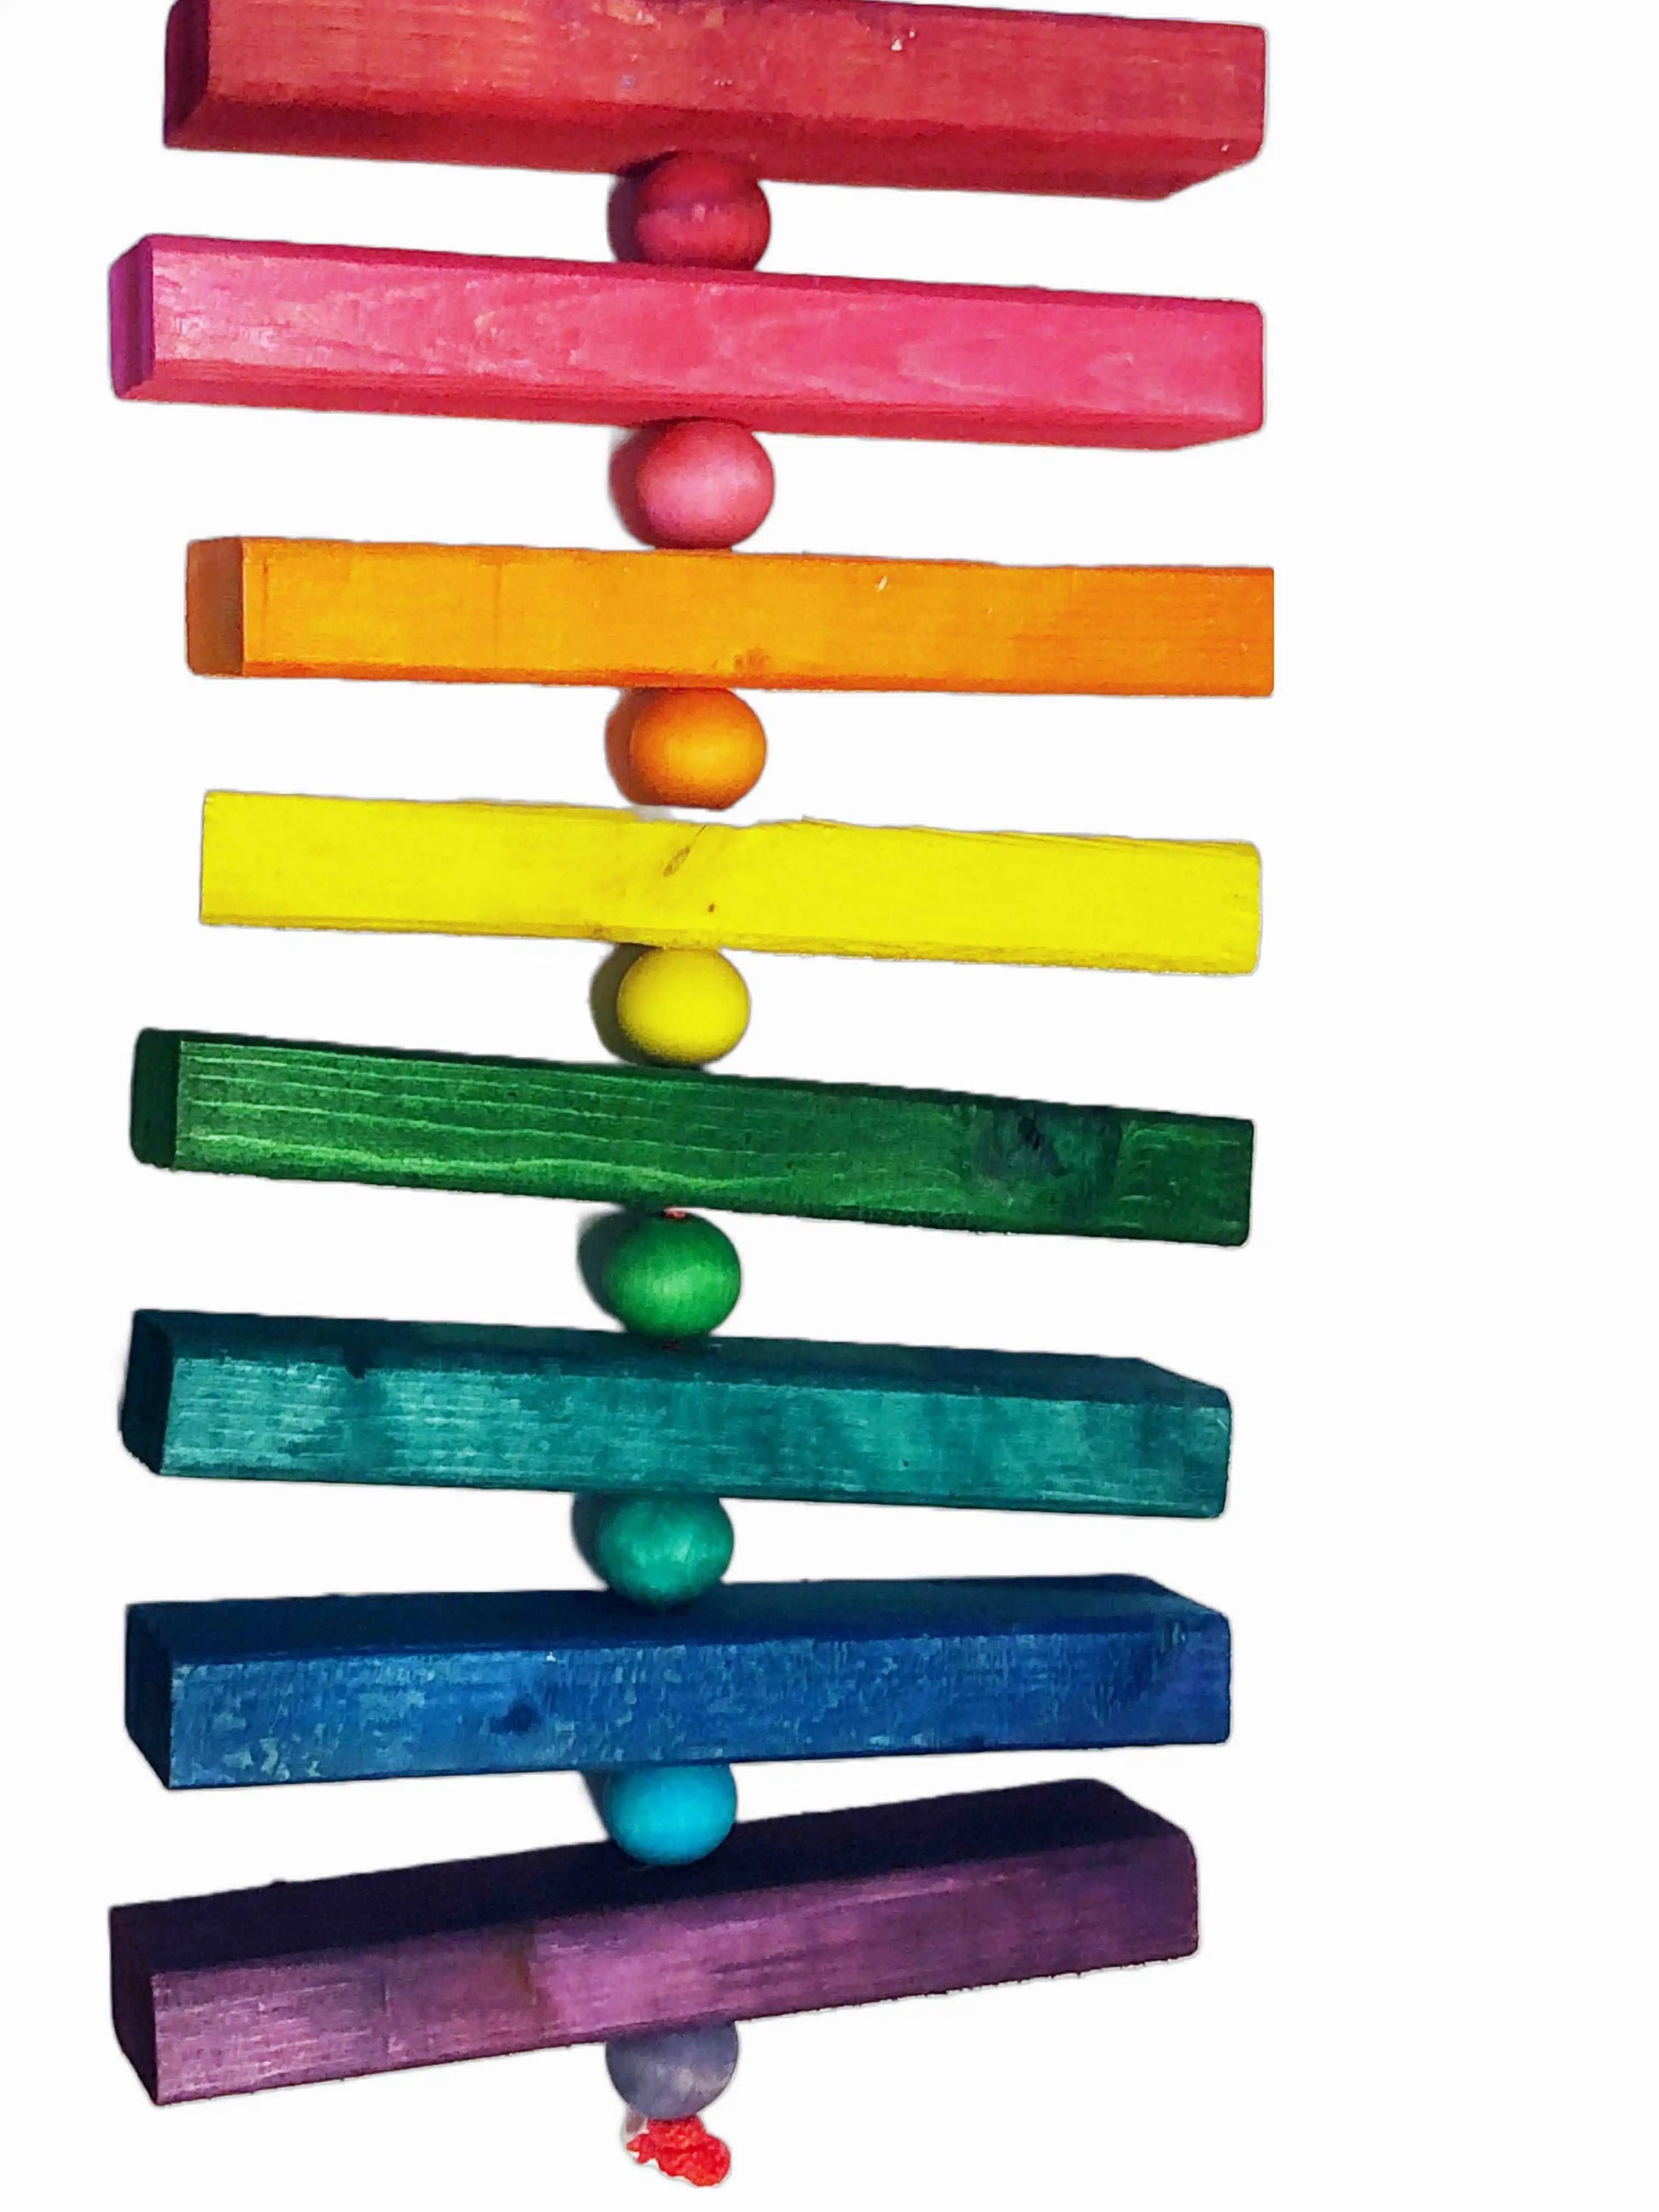 Pinewood bird toy with rainbow blocks